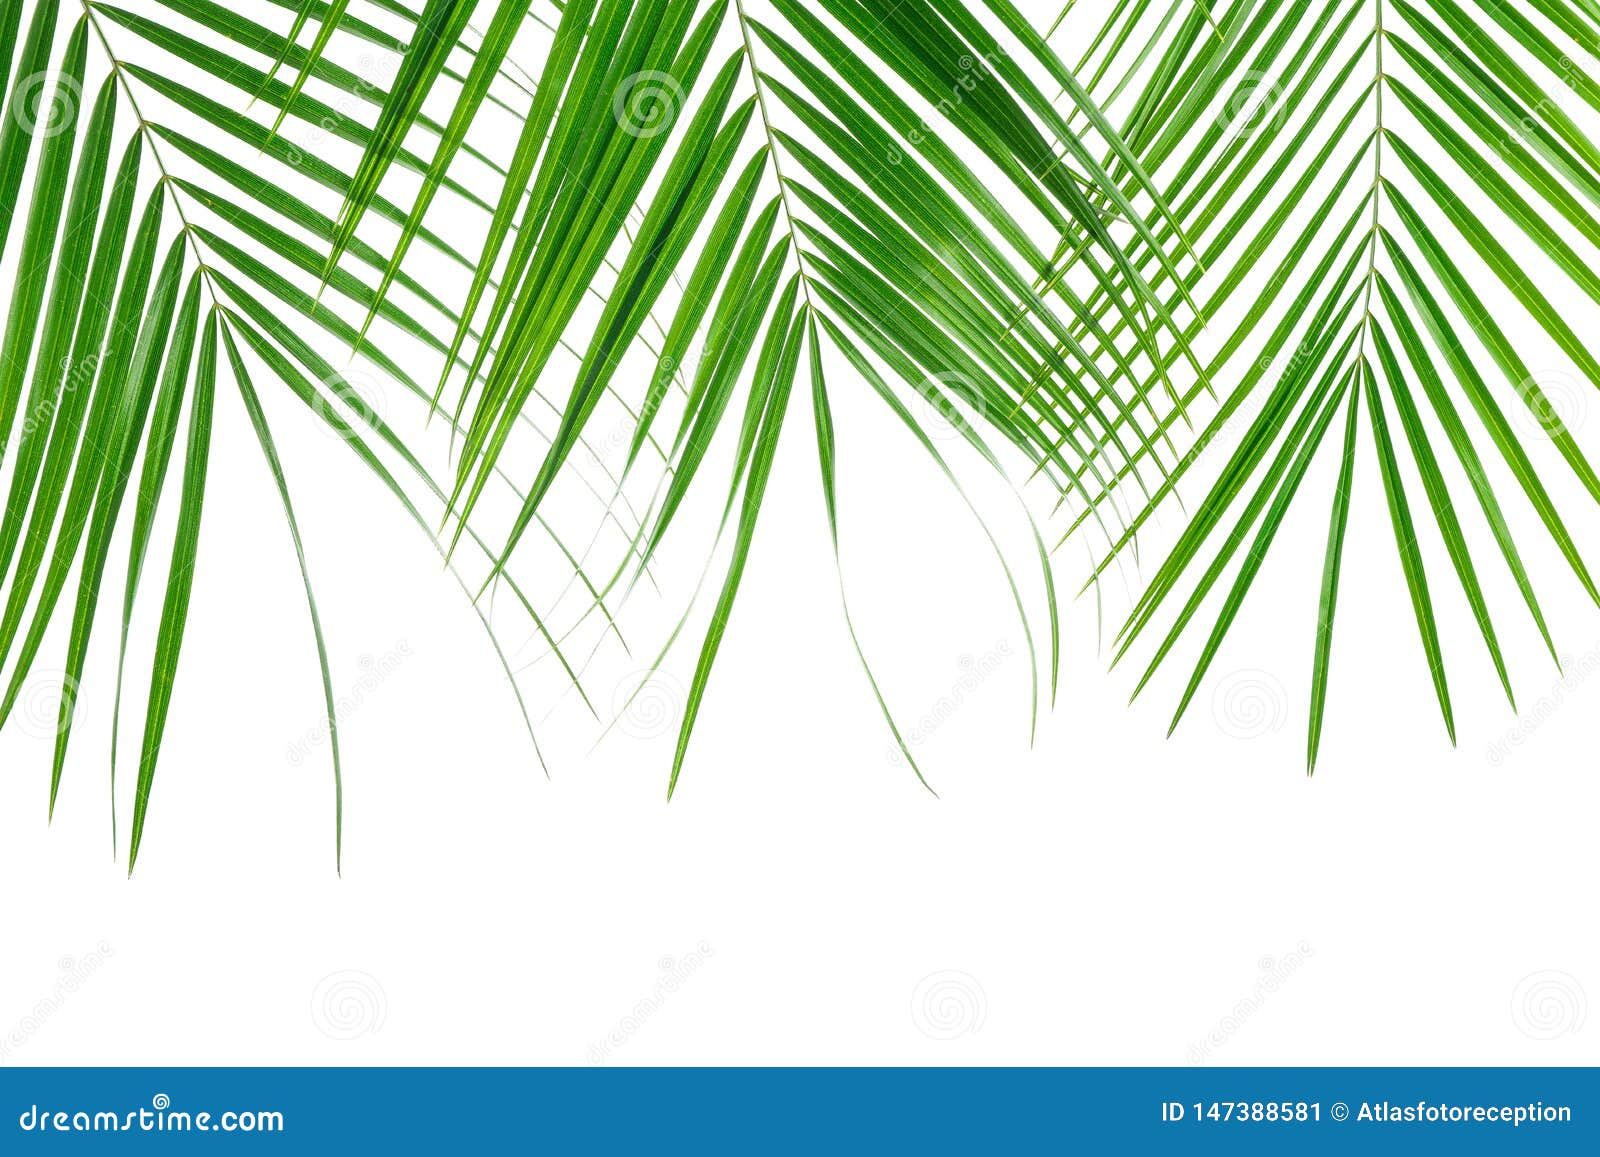 Beautiful Palm Leaves Isolated on White Background Stock Image - Image